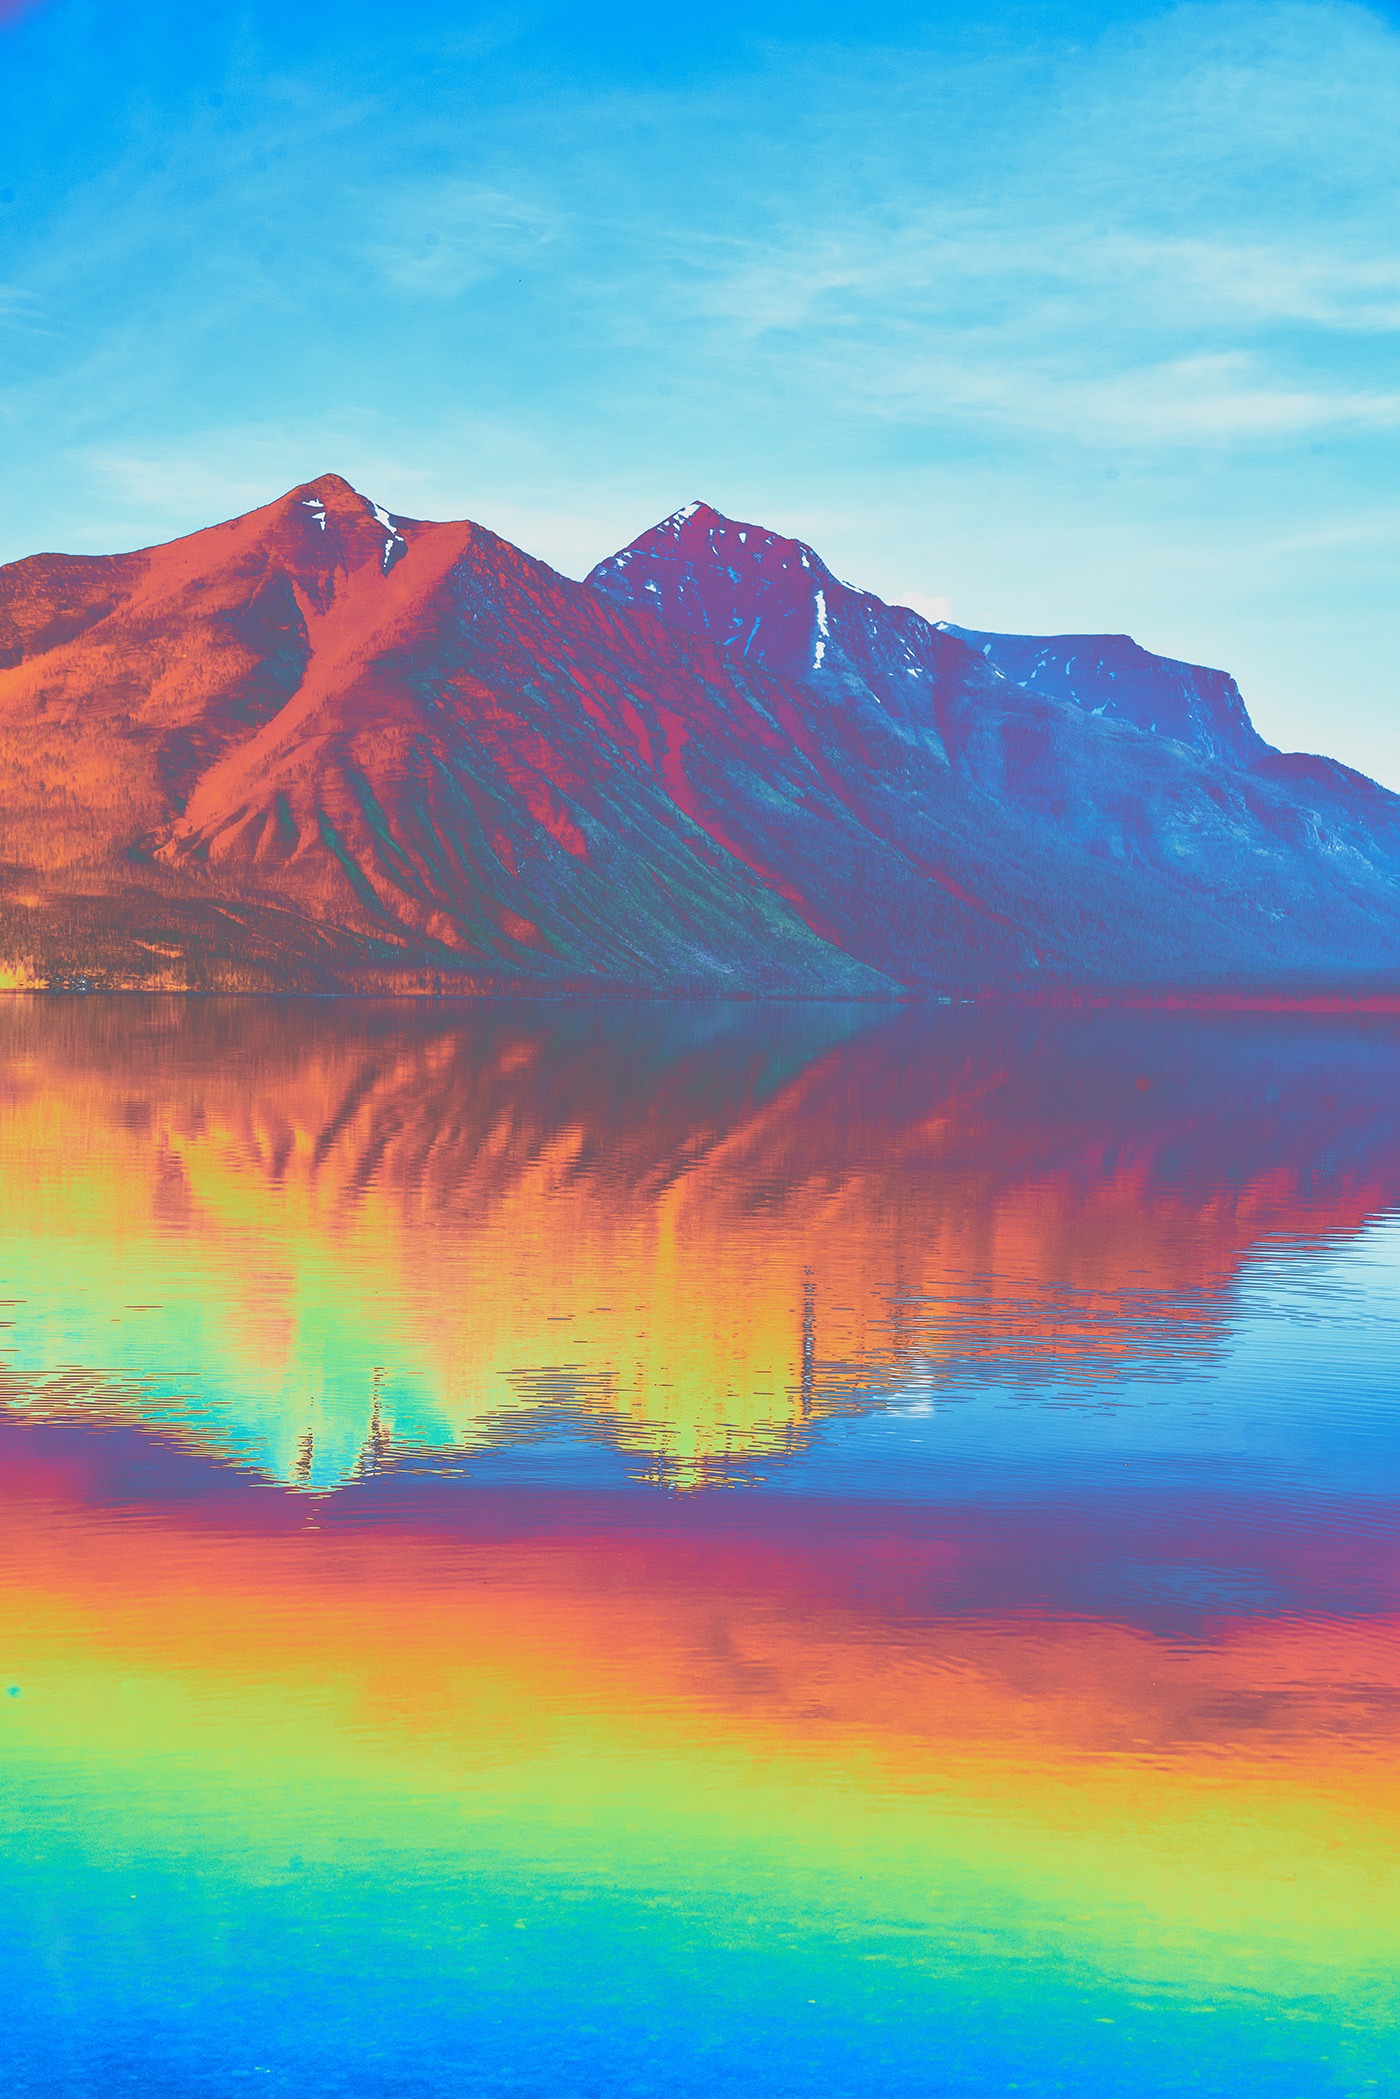 Digital vibrant rainbow color glitch over a lake and mountain landscape